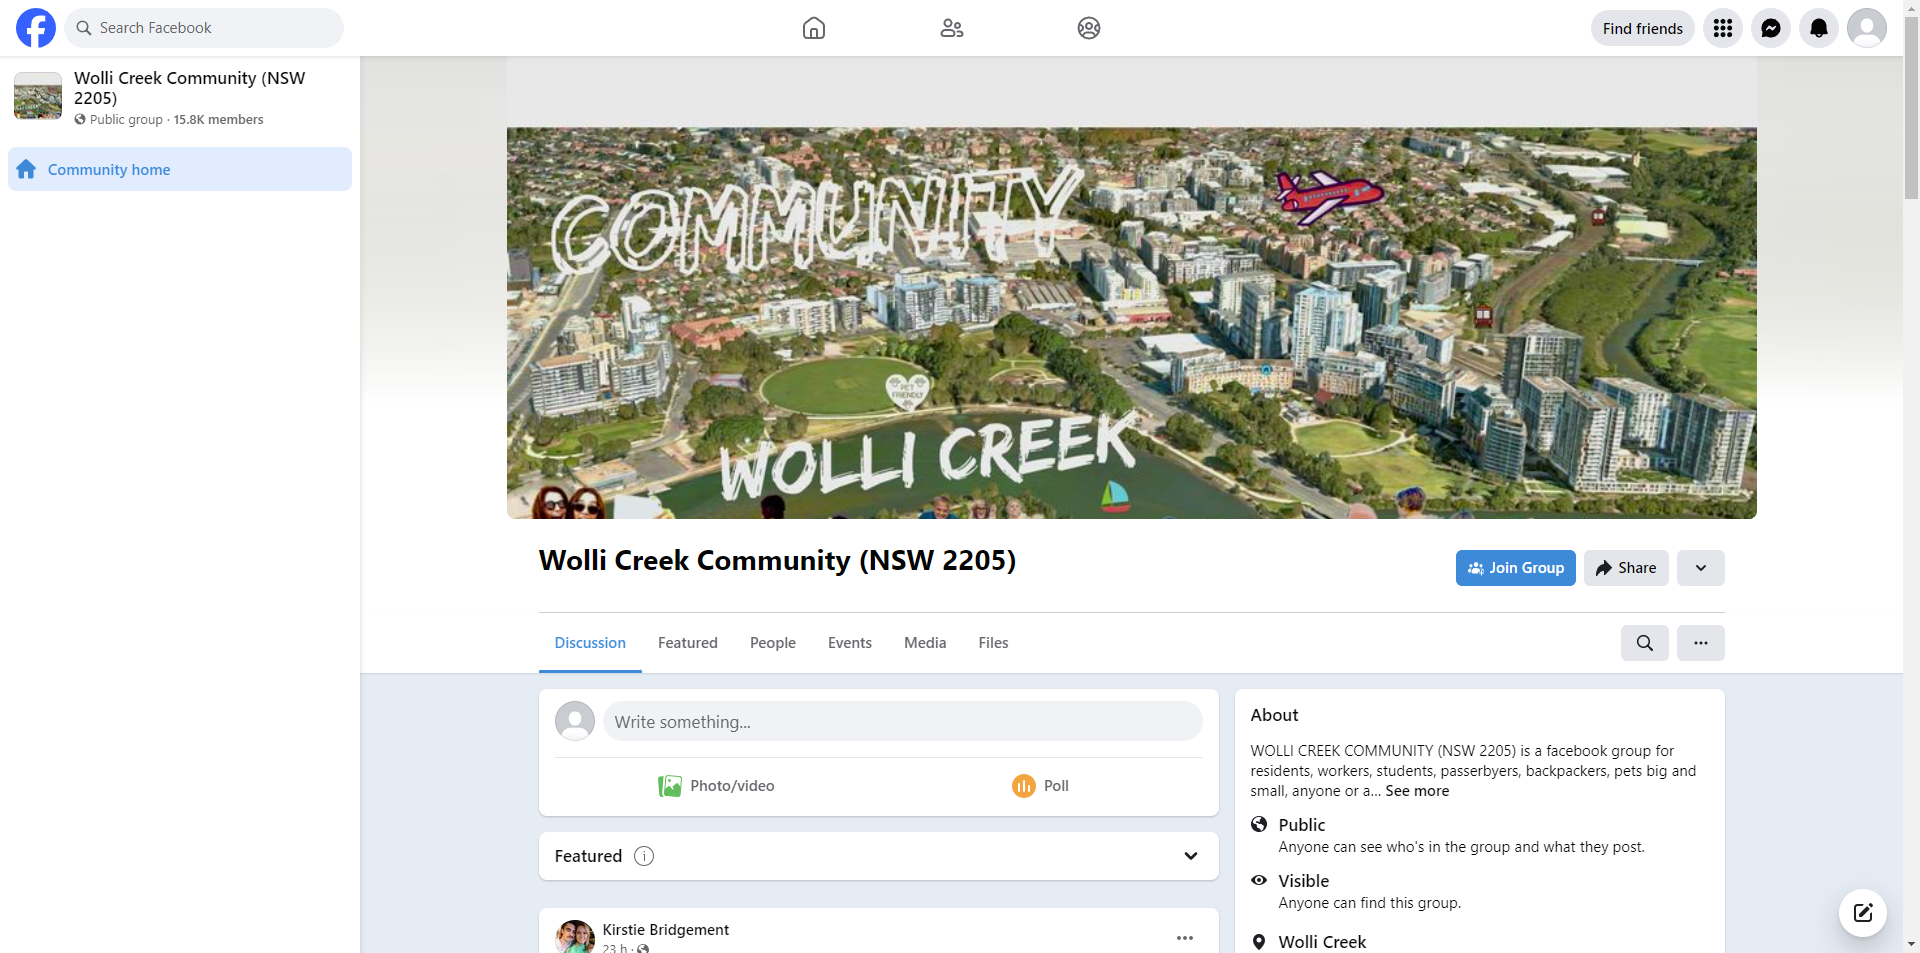 Wolli Creek Community (NSW 2205)